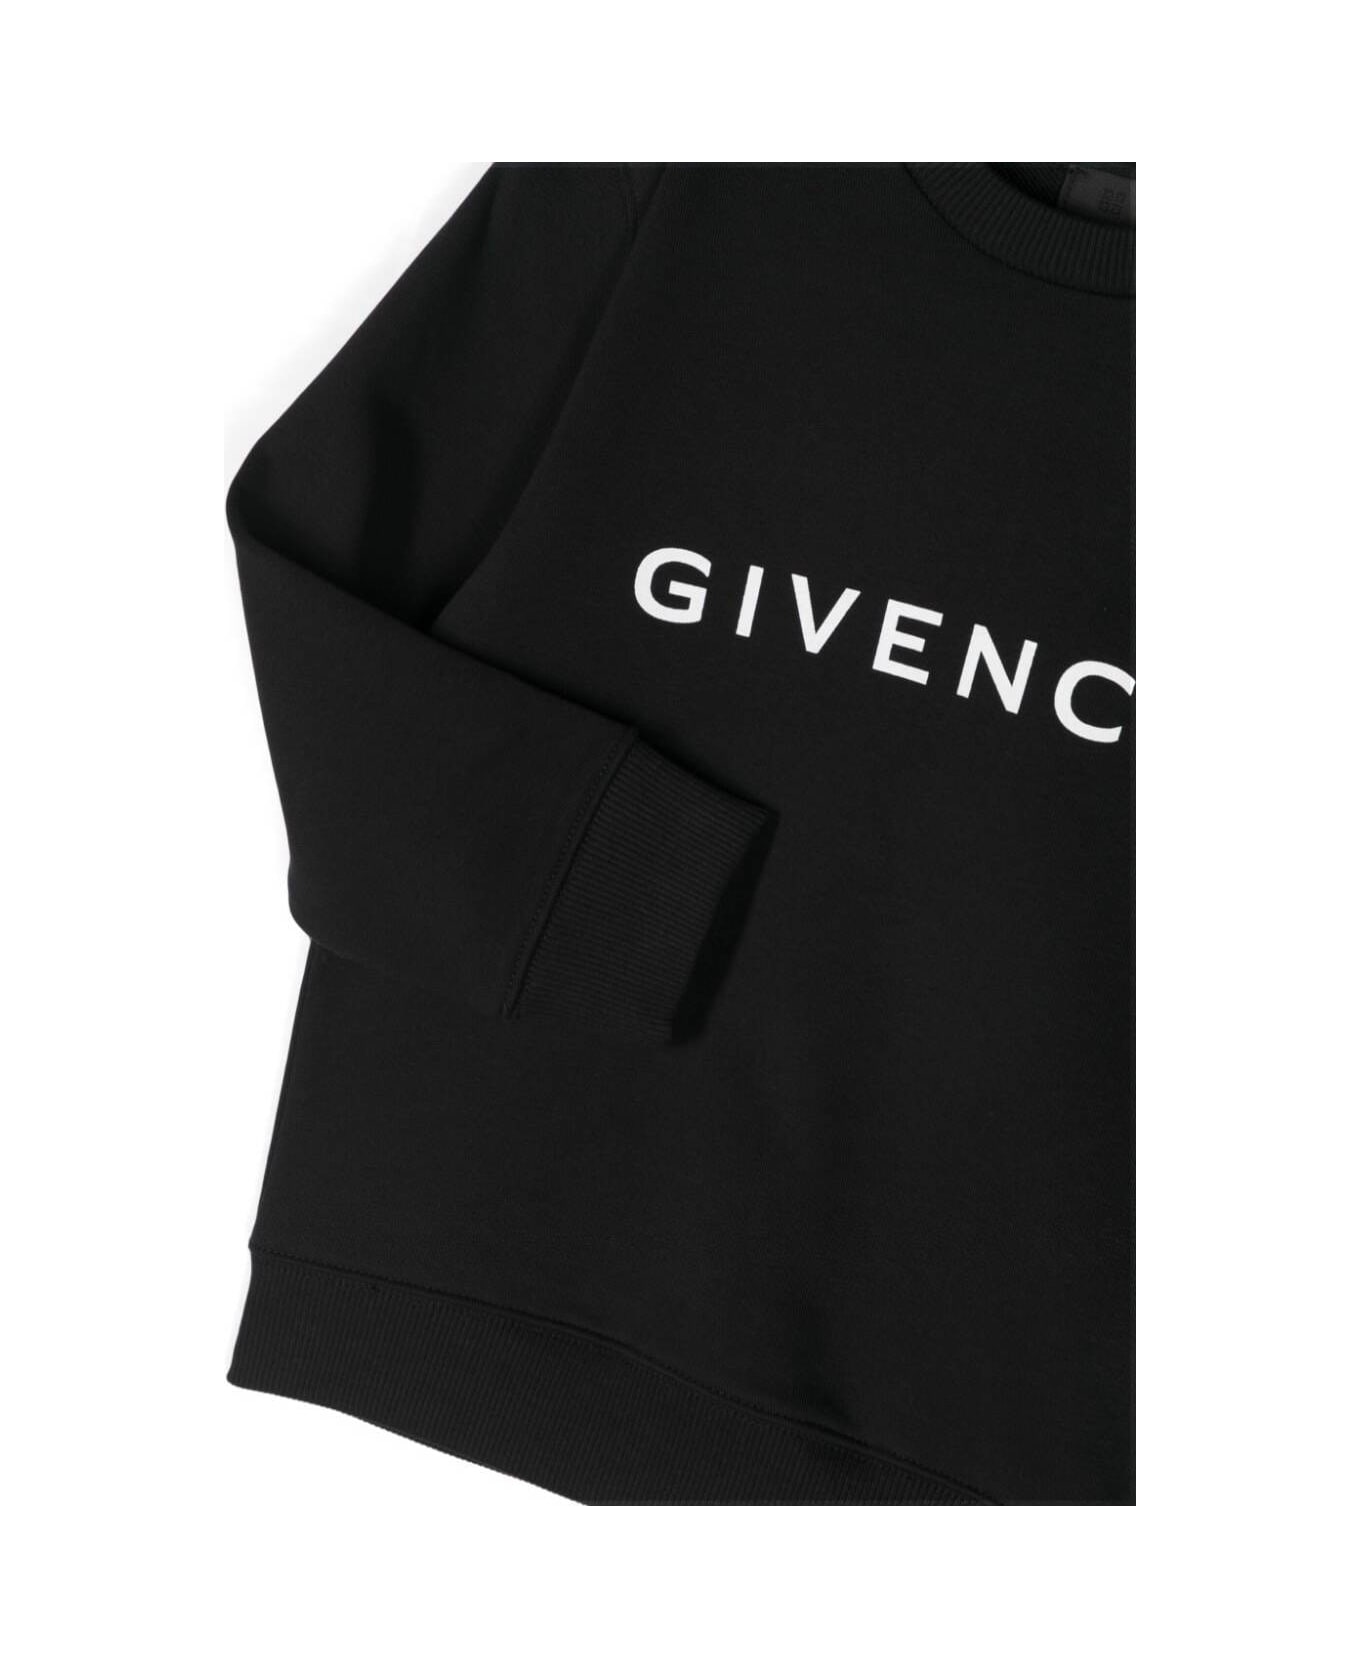 Givenchy Black Crewneck Sweatshirt With Contrasting Logo Lettering In Cotton Boy - Black